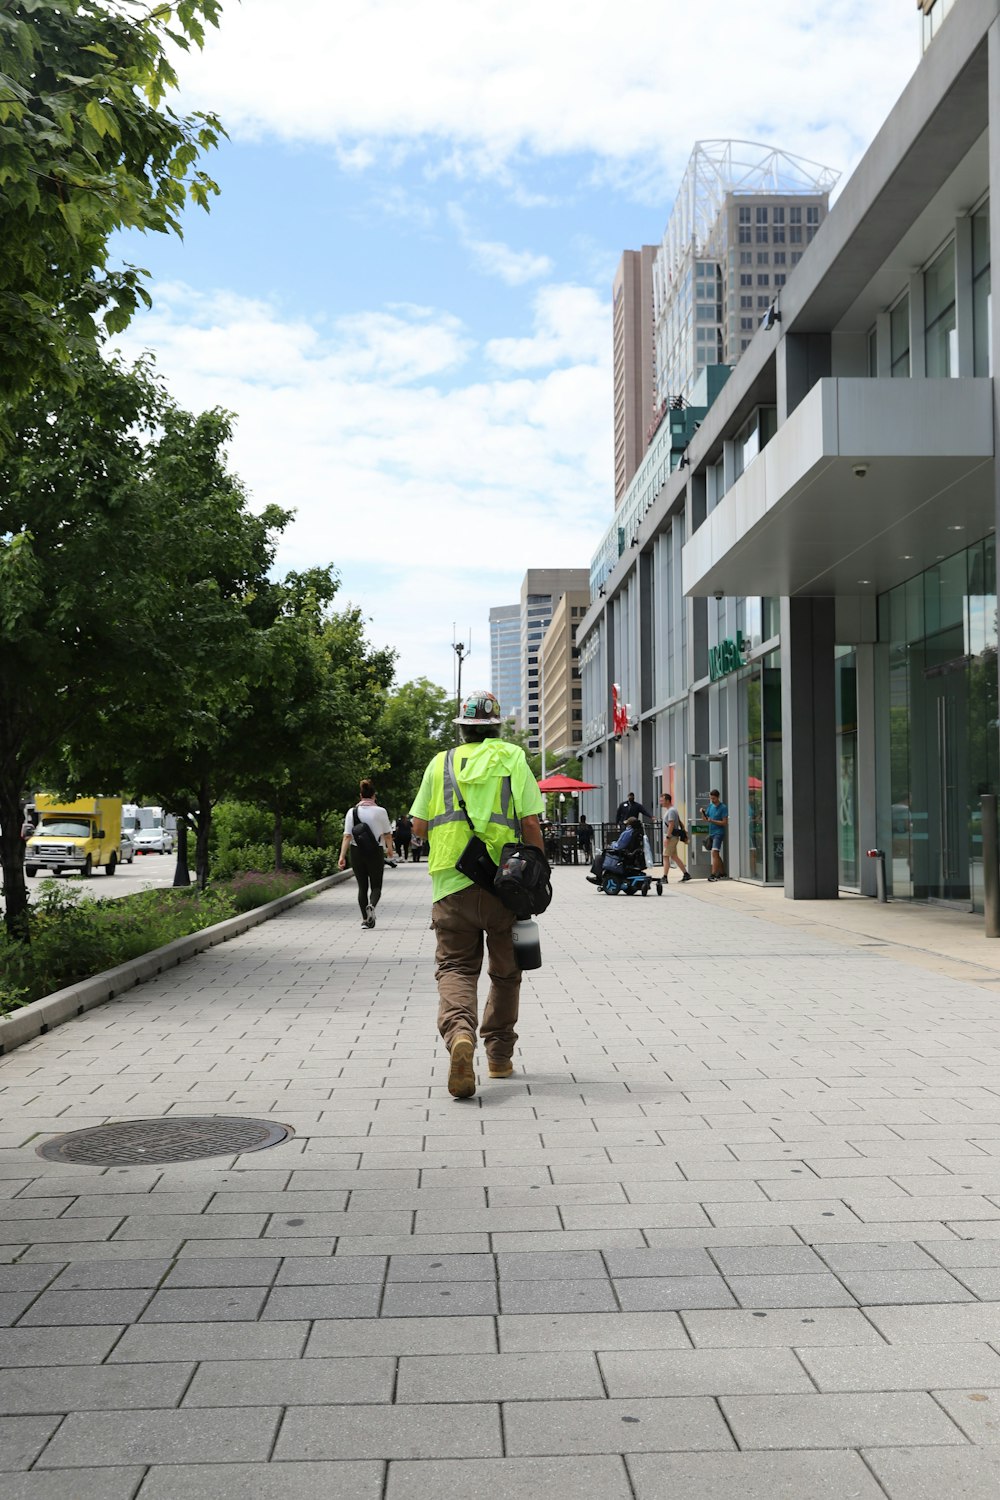 a person in a yellow vest walking down a sidewalk